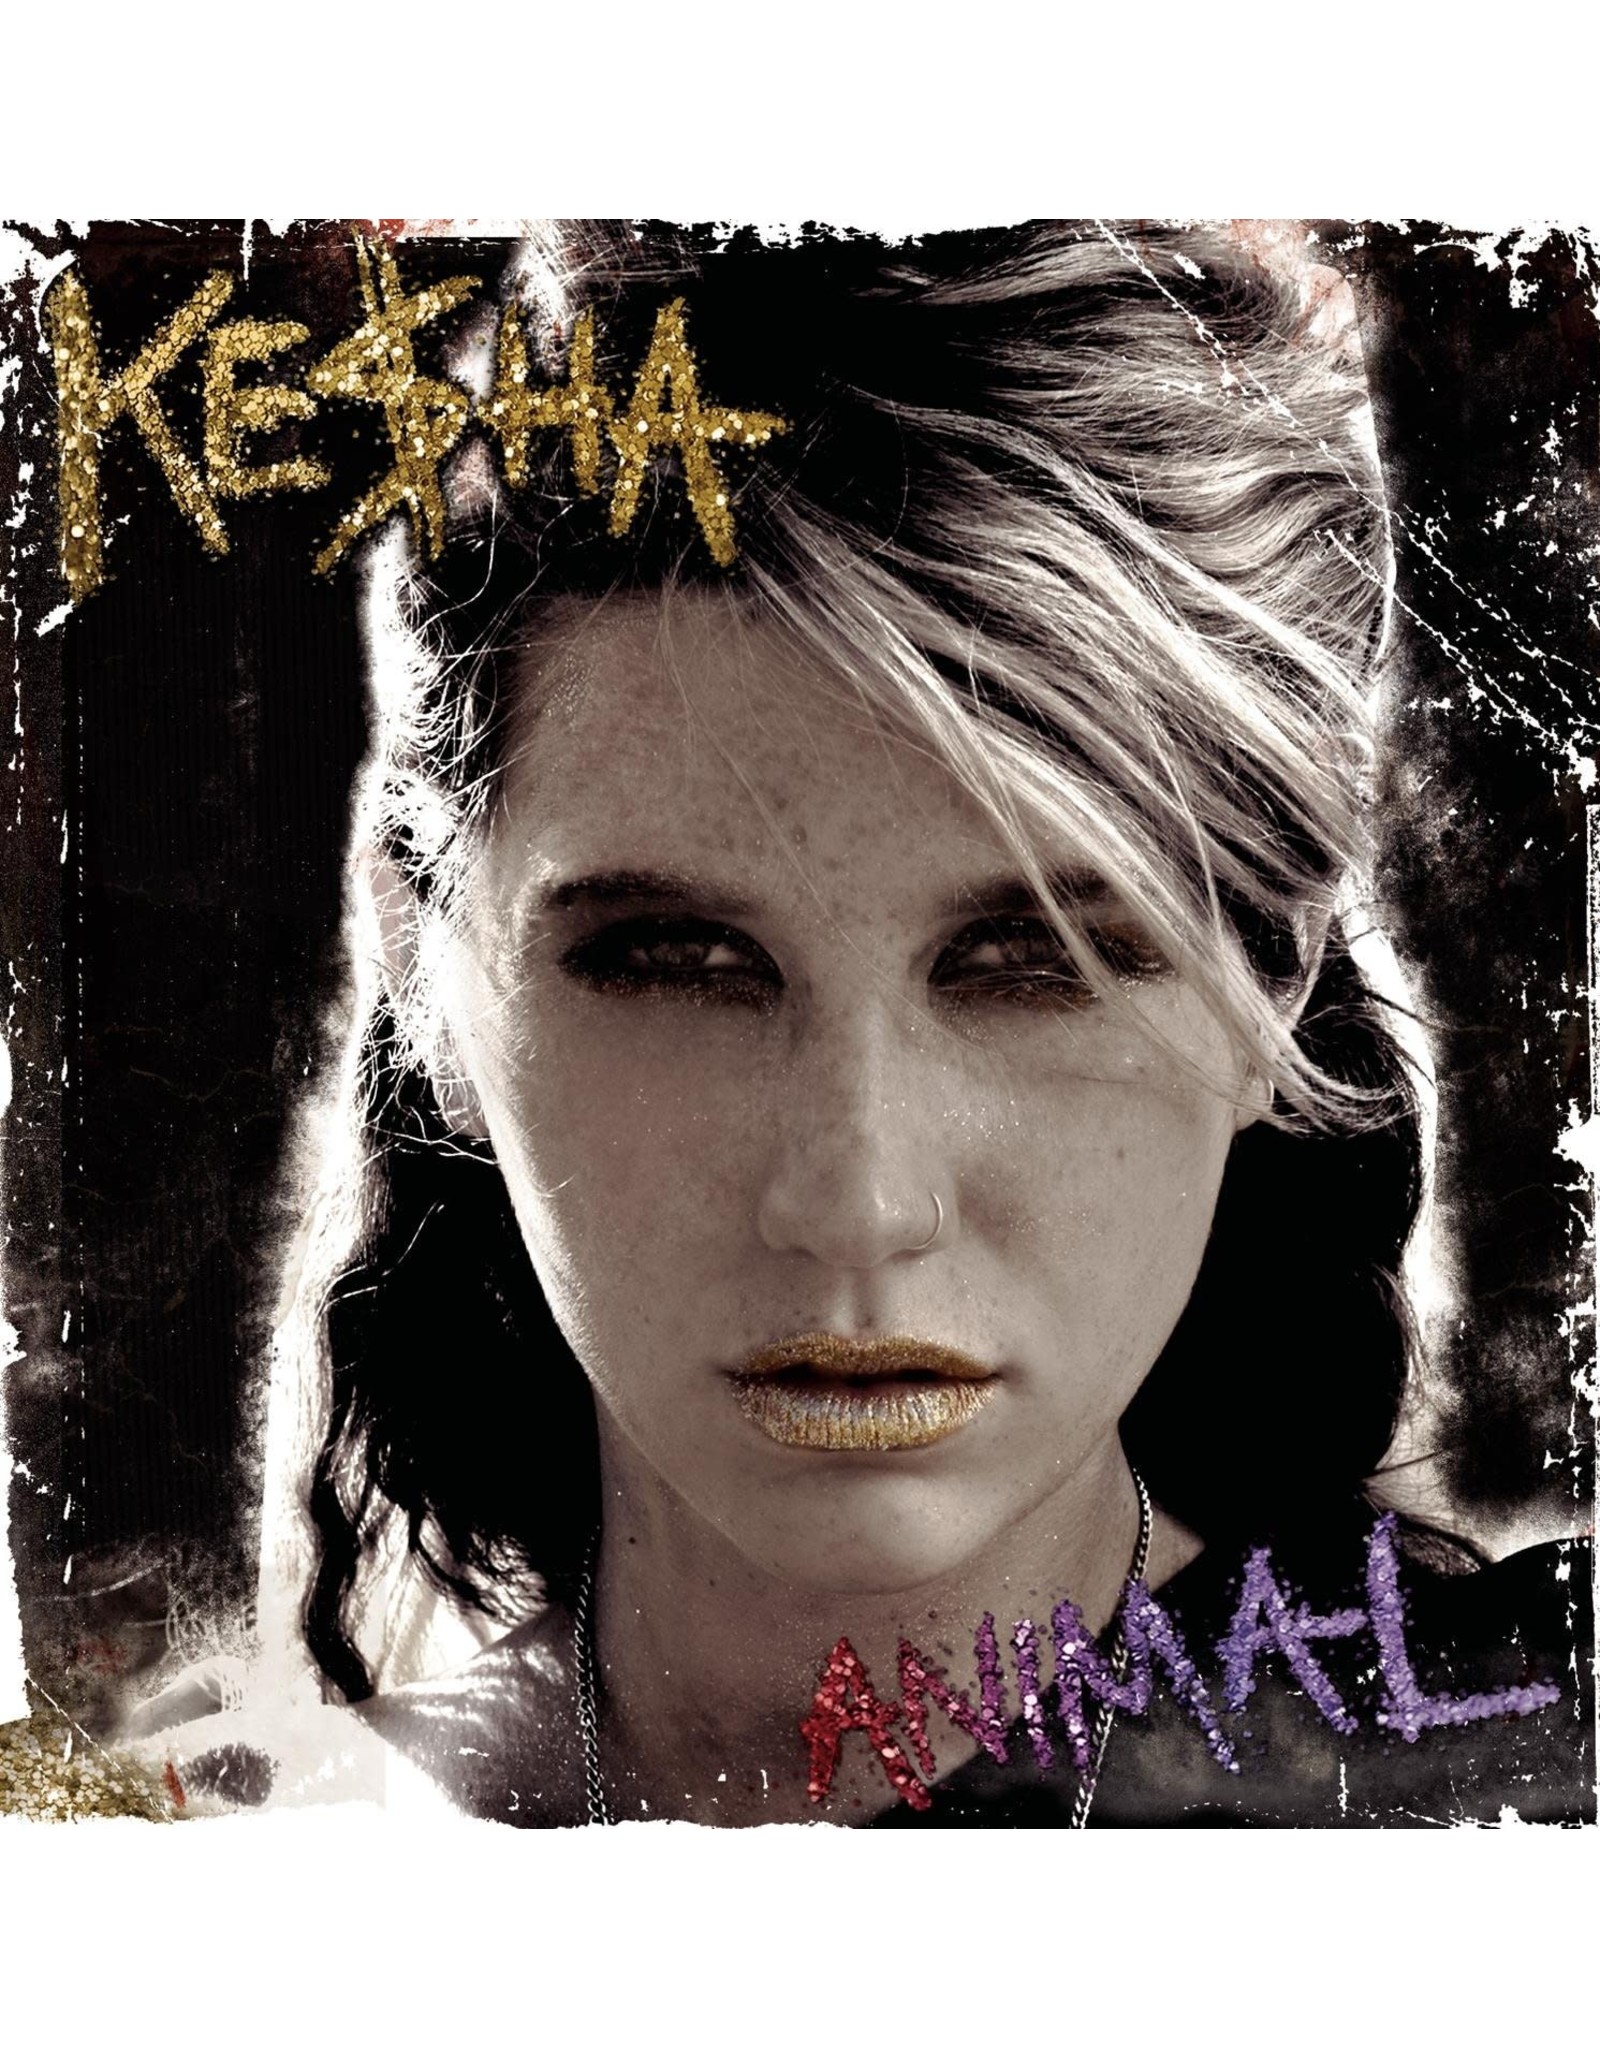 Kesha - Animal (Expanded Edition)